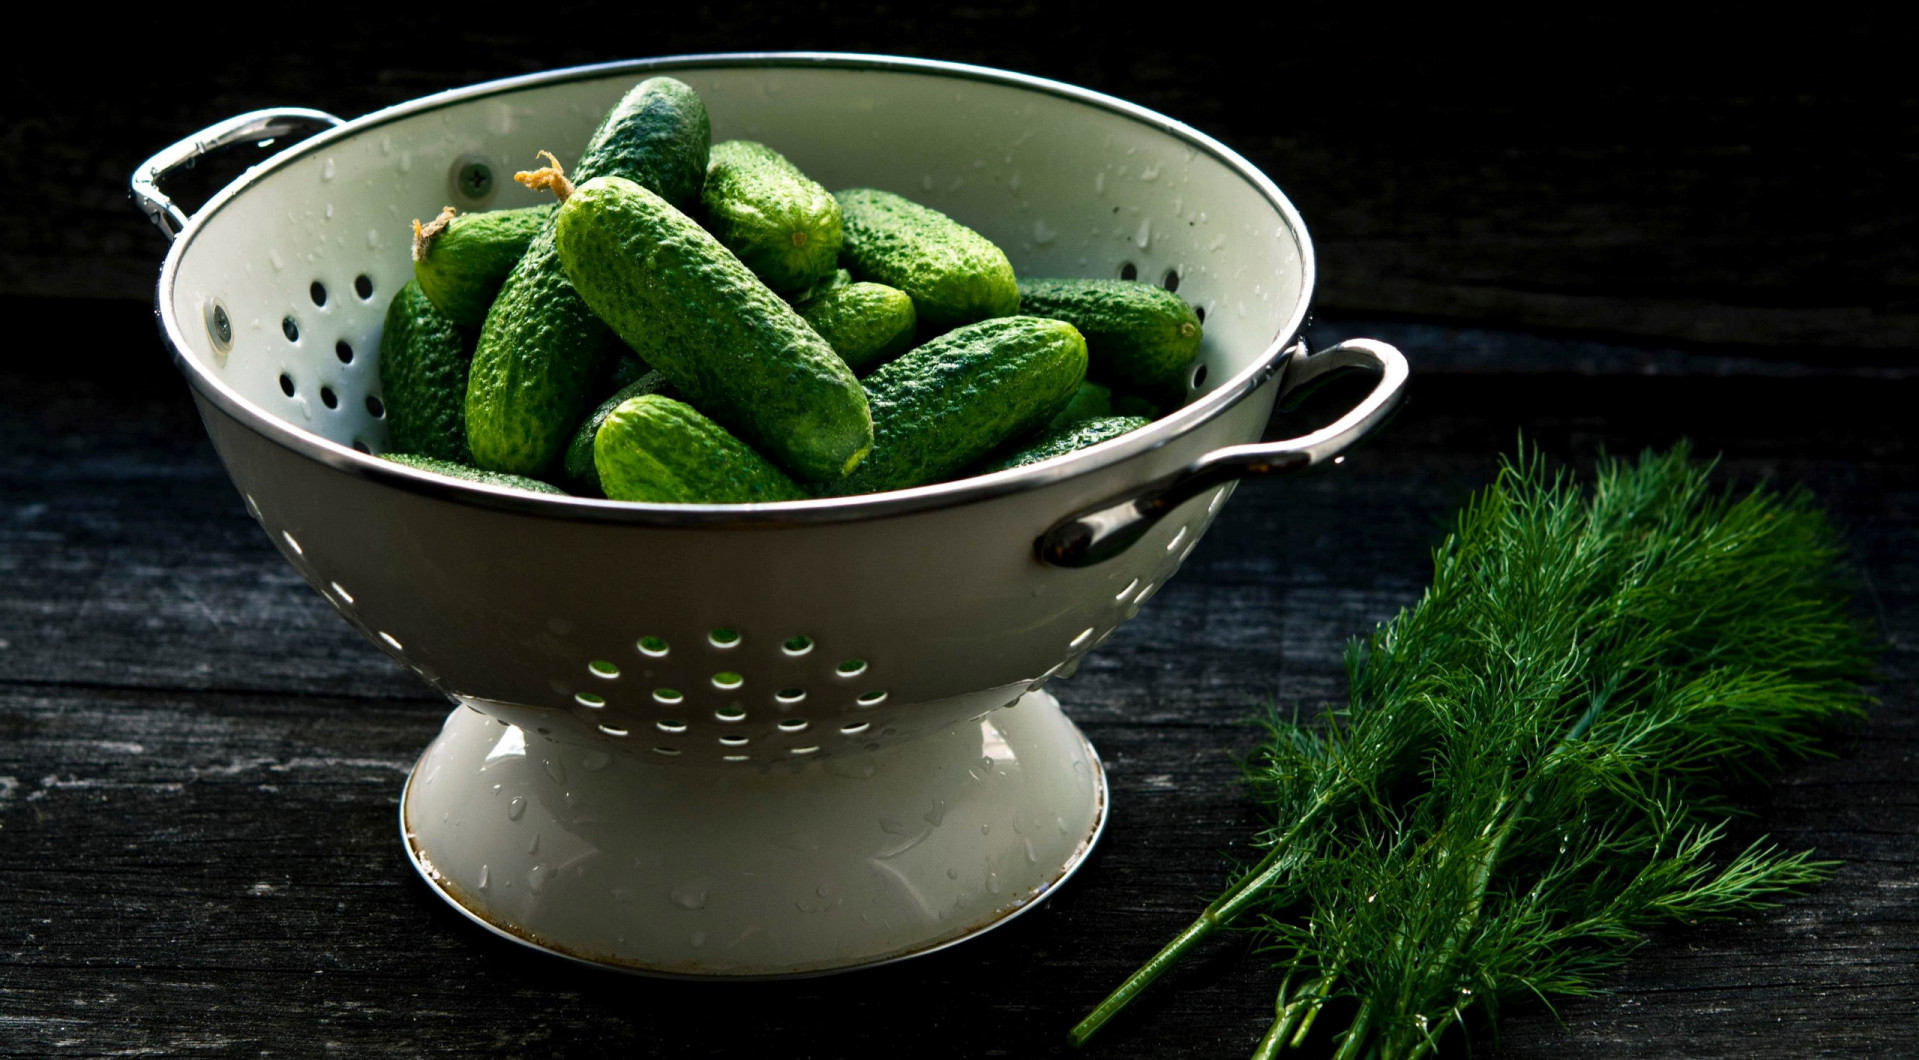 General 1919x1060 food vegetables cucumbers dill gherkins